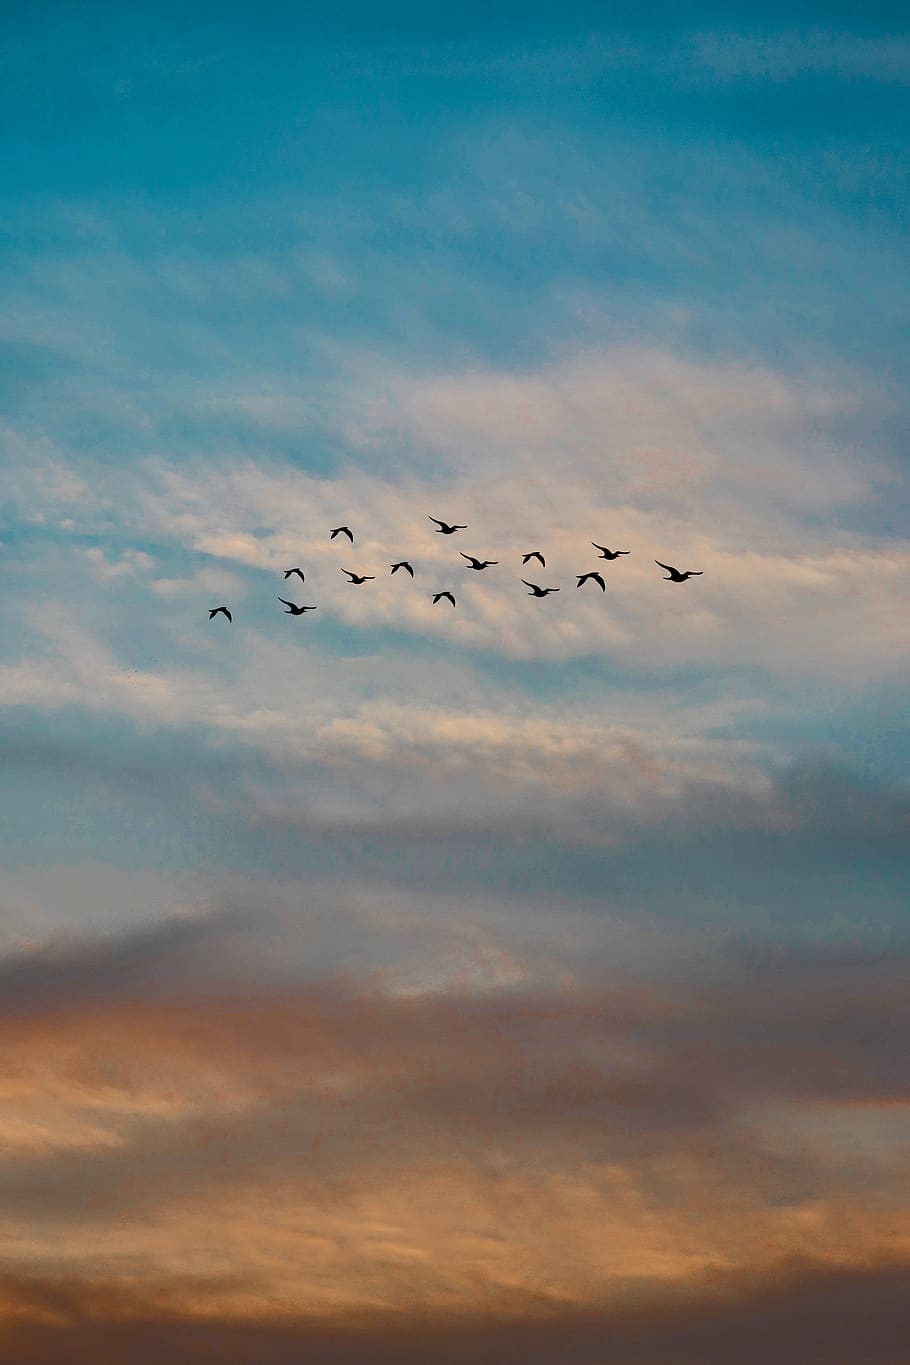 Photo of a Flock of Flying Birds, evening, evening sky, flock of birds